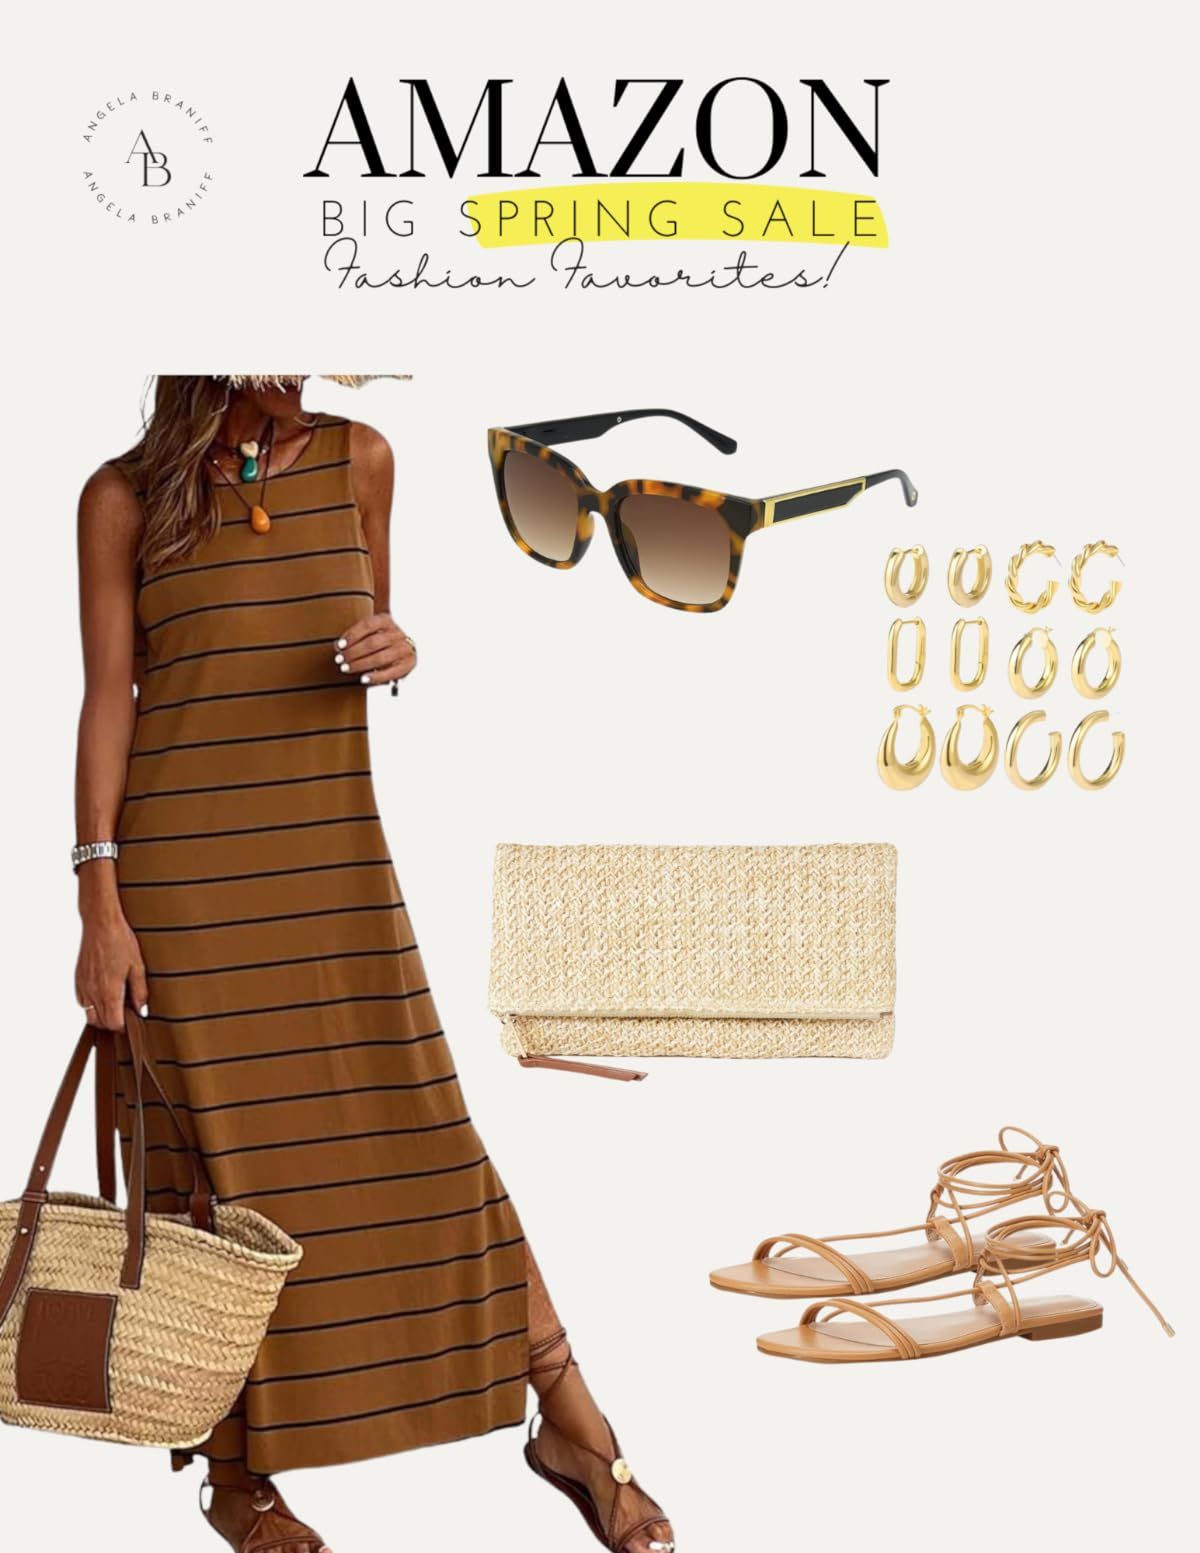 Big Spring Sale Fashion Favorites! | Amazon (US)